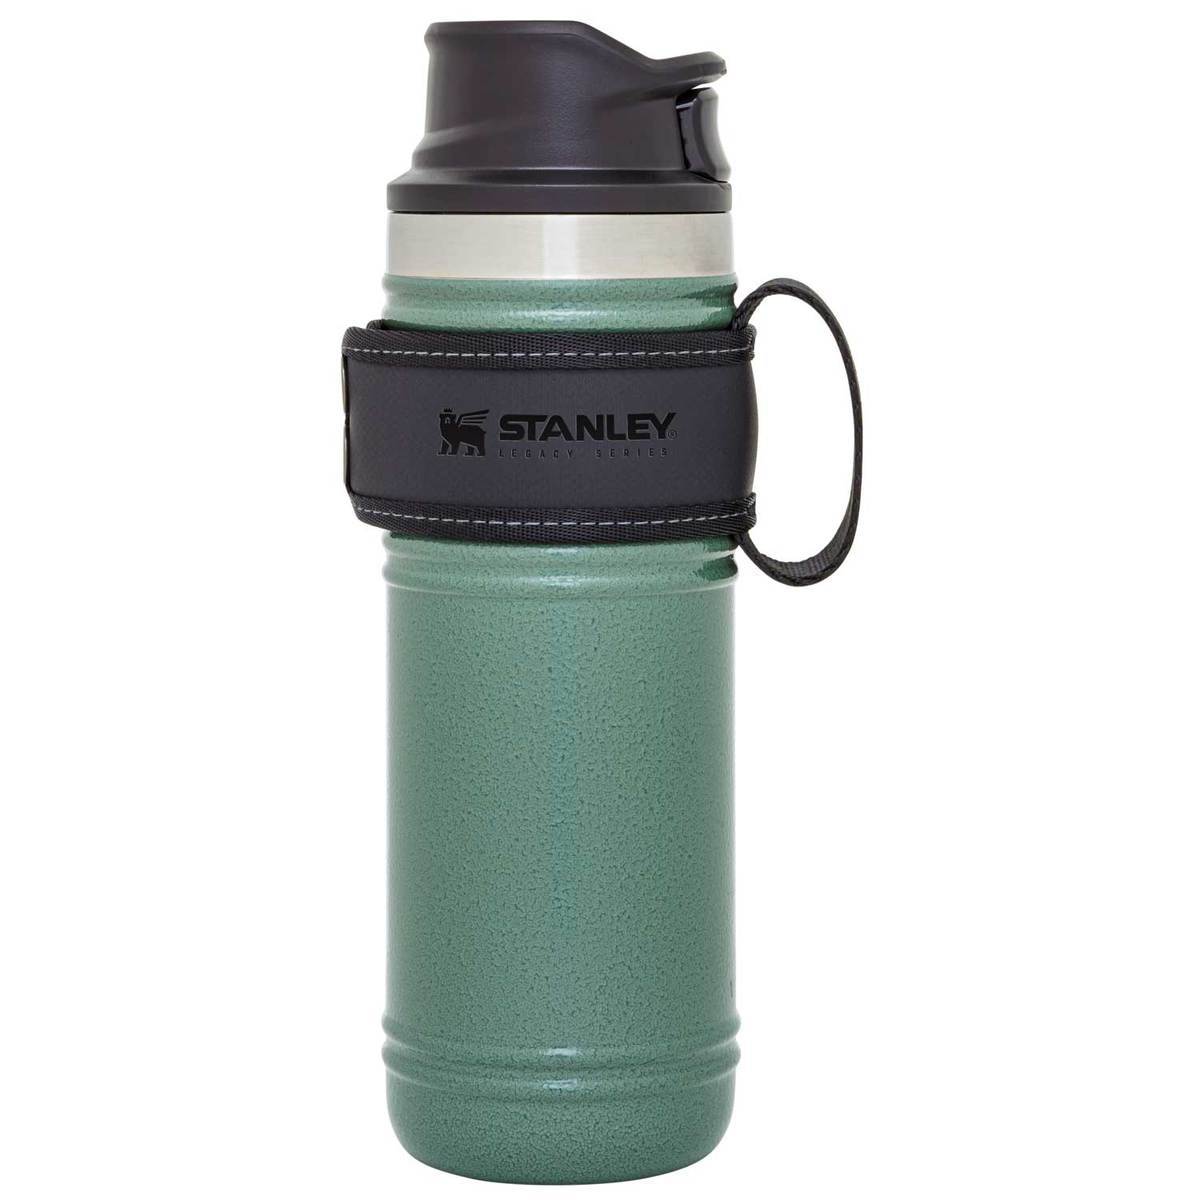 Stanley 20 oz Trigger Action Travel Mug in Hammertone Clay